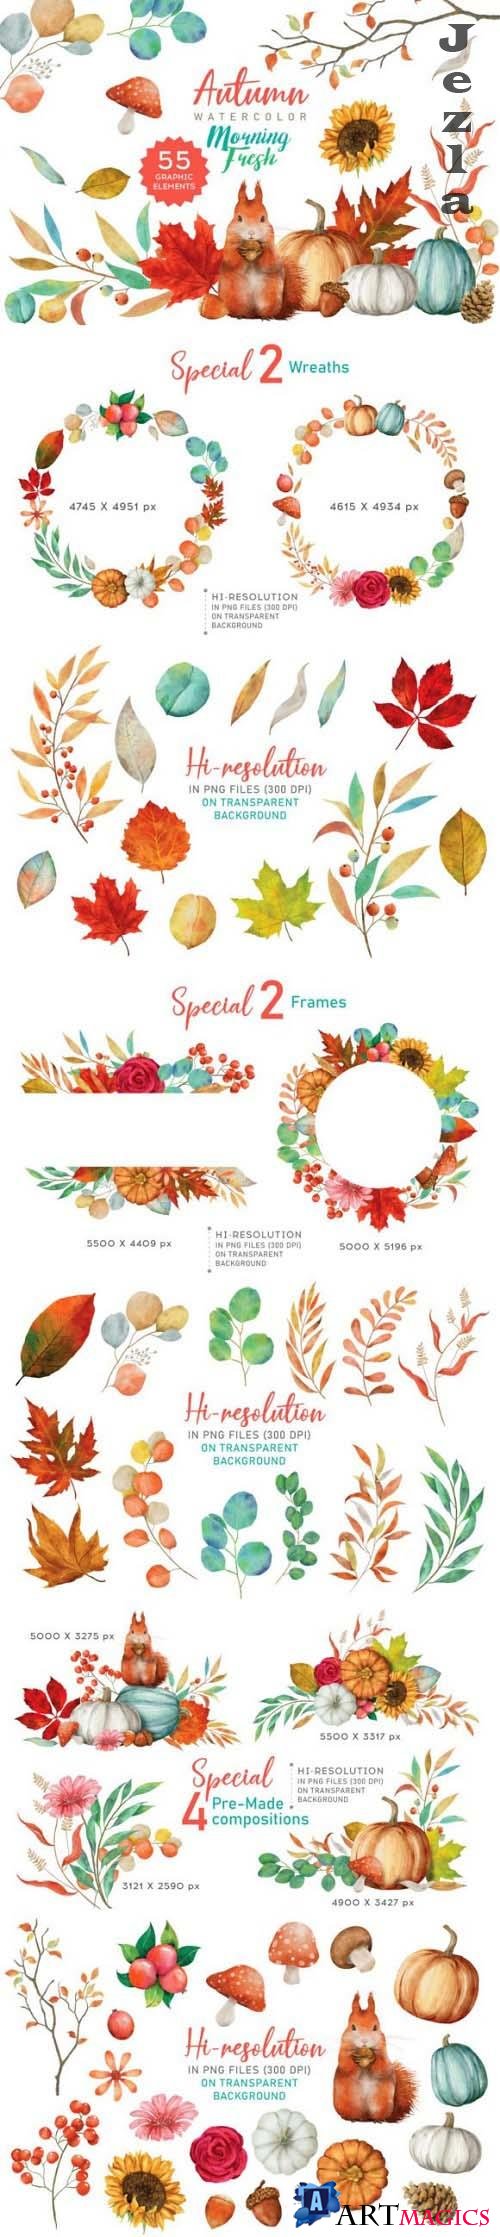 Autumn Leaves Watercolor PNG Elements